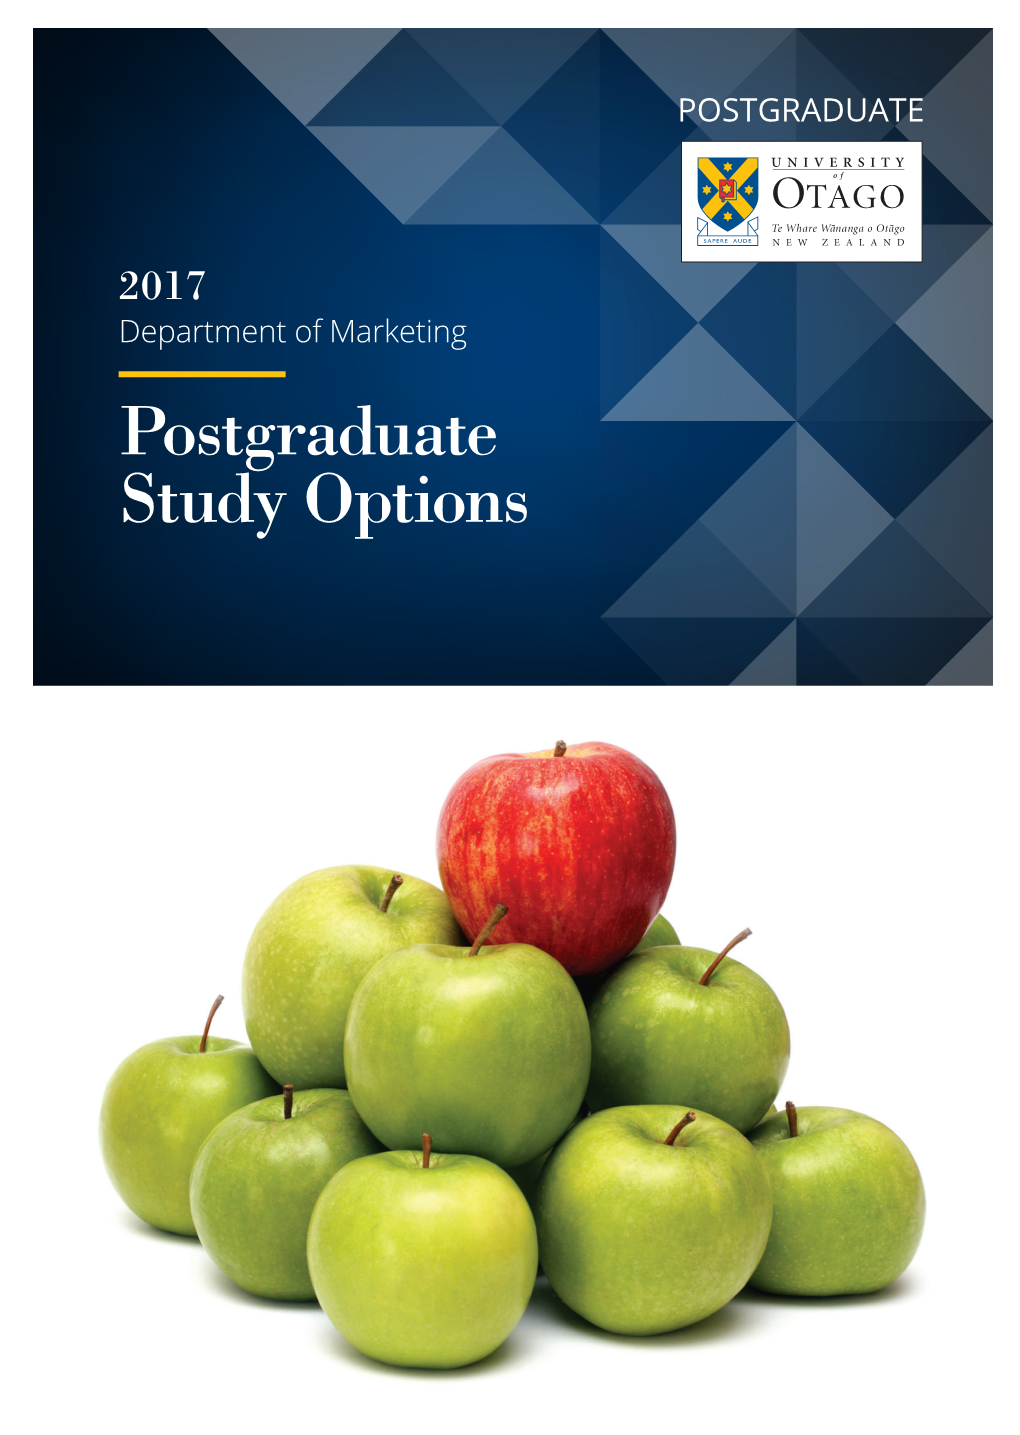 Postgraduate Study Options